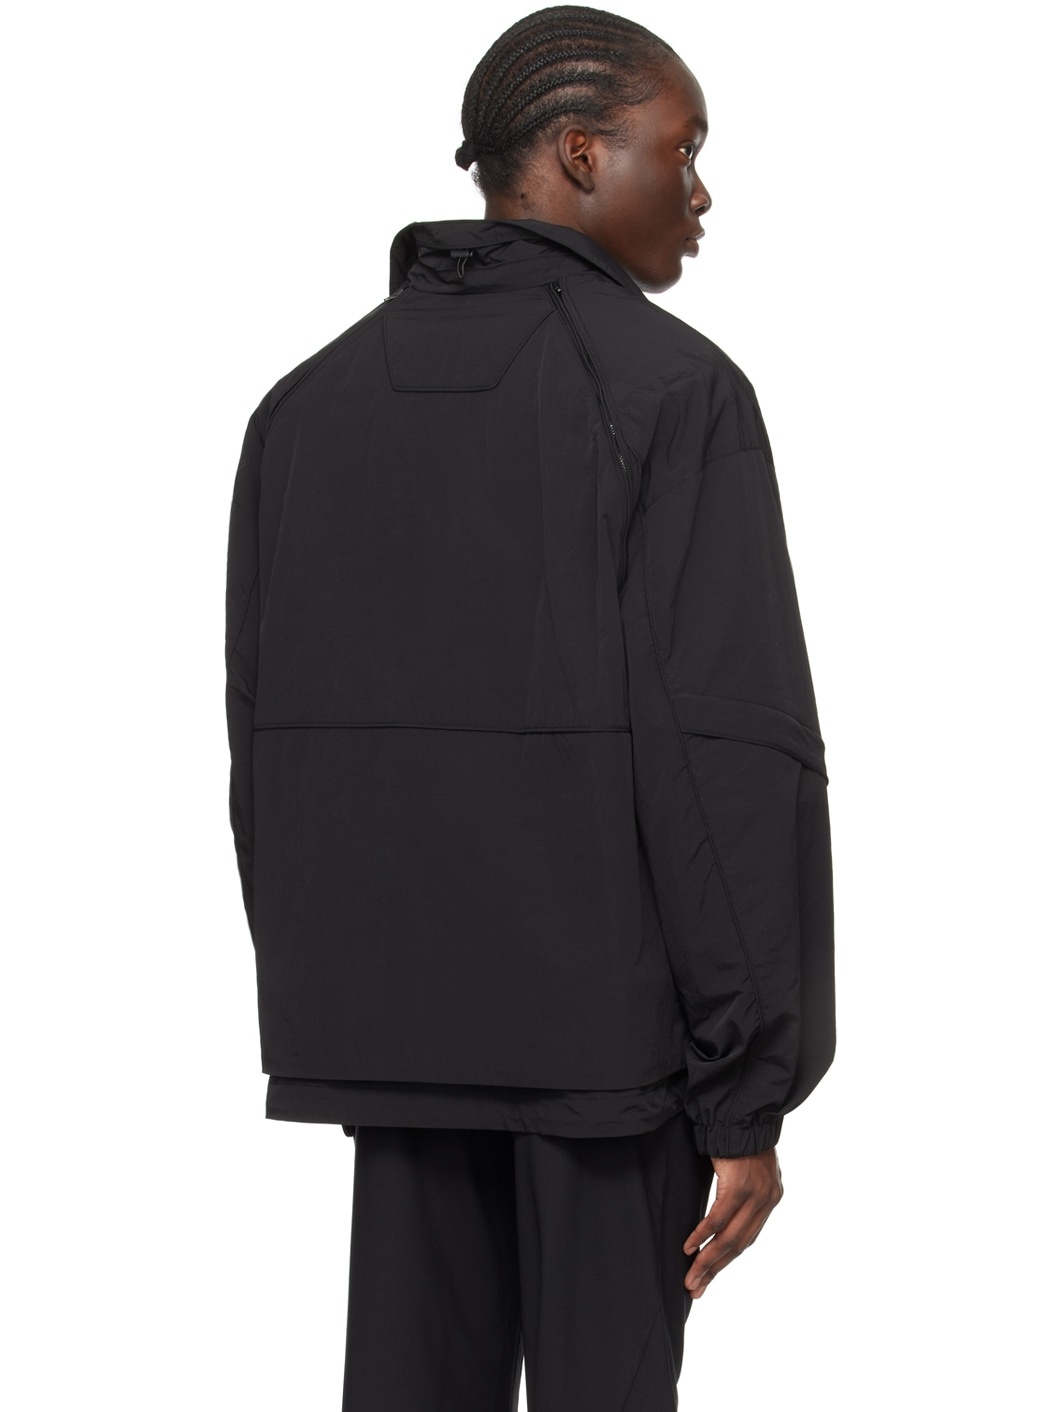 Black Detachable Sleeve Jacket - 3